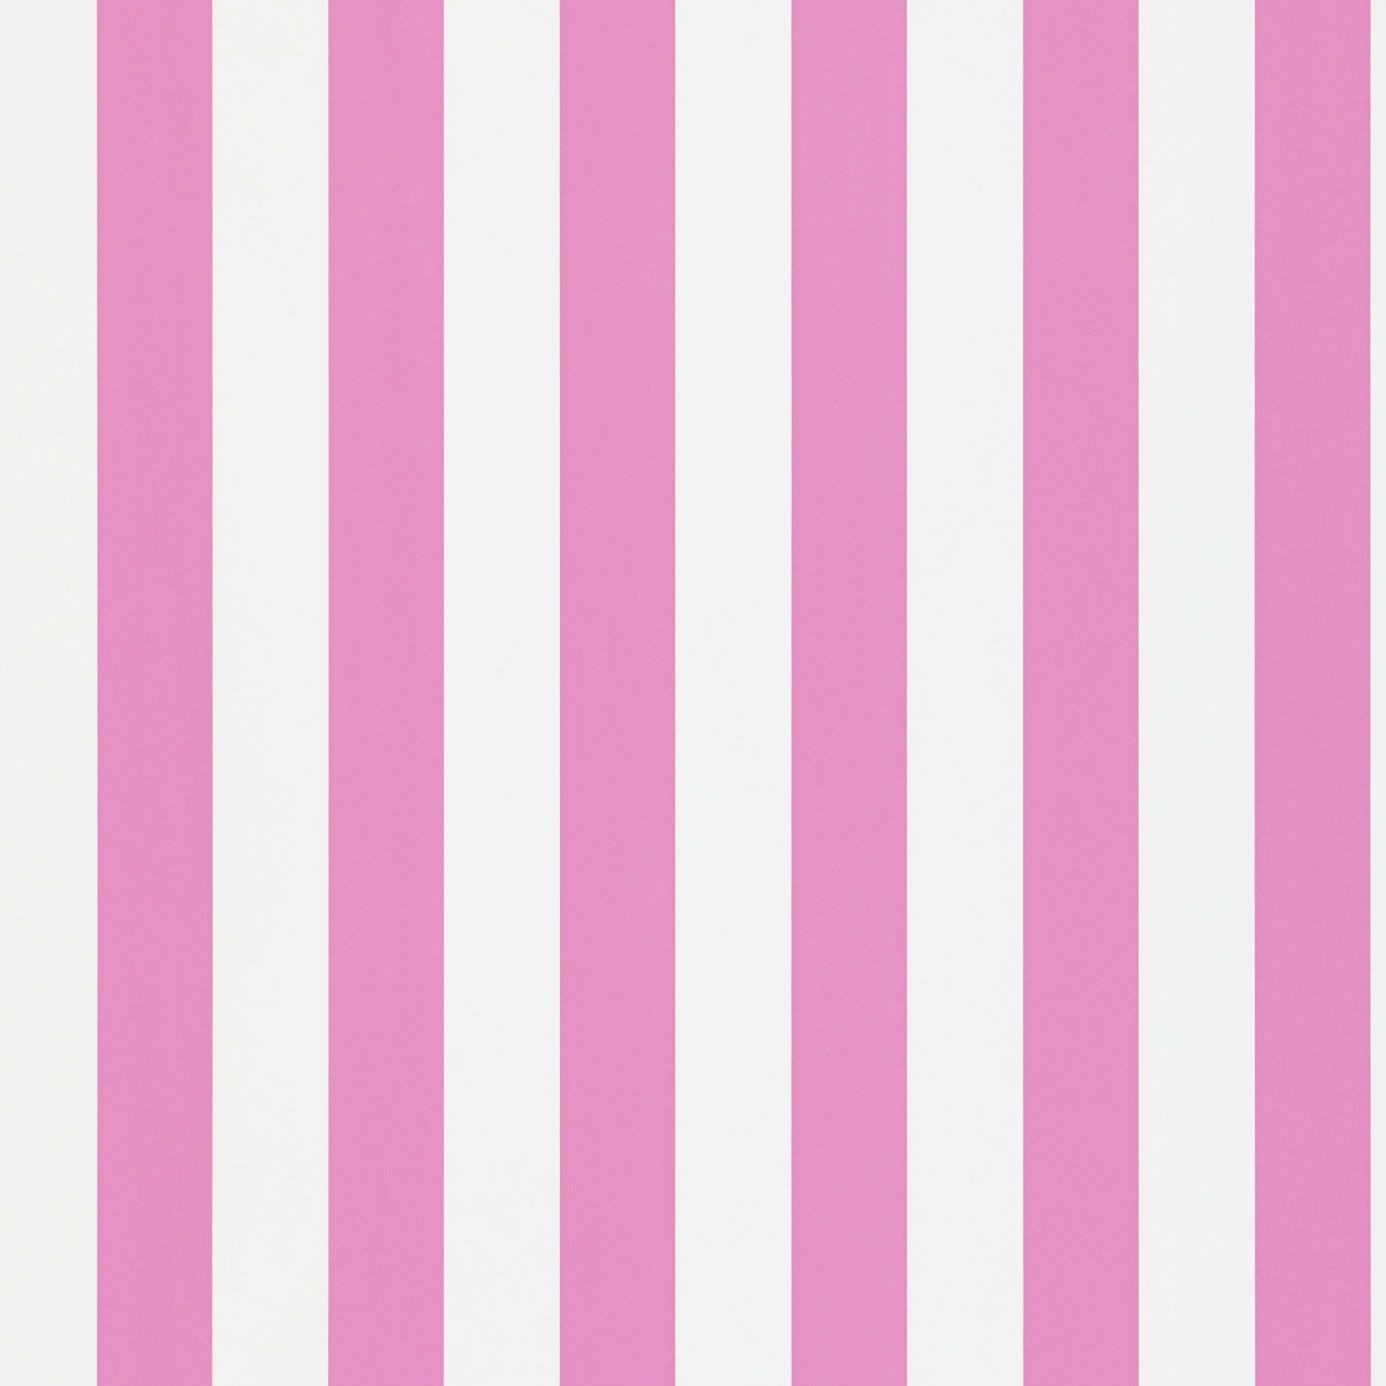 Classic Pink White Stripe Wallpaper Backdrop Stock Vector Royalty Free  430457659  Shutterstock